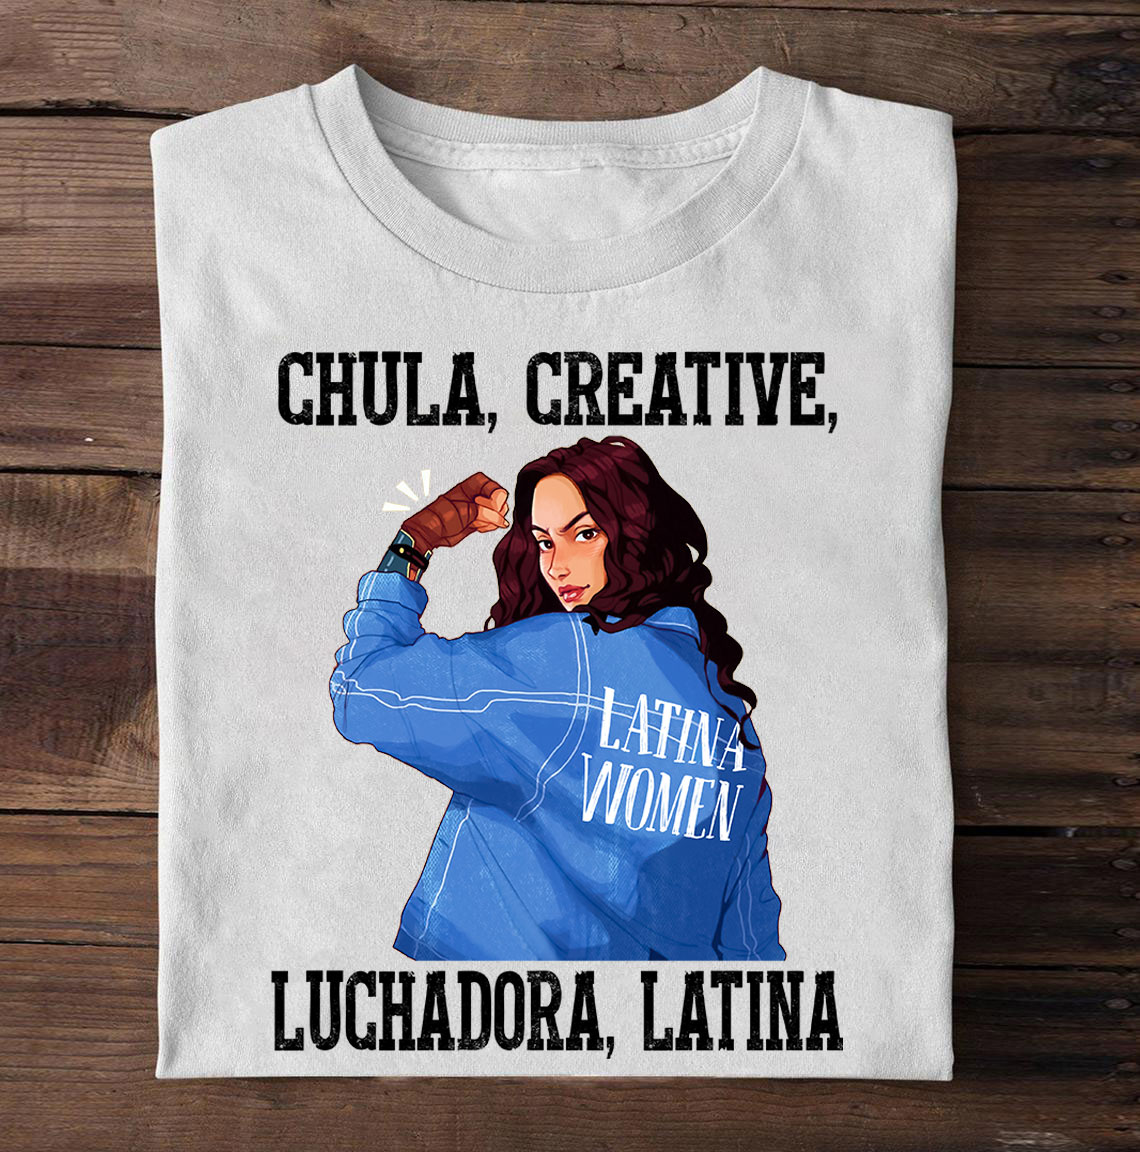 Chula, creative luchadora, latina - Latina women